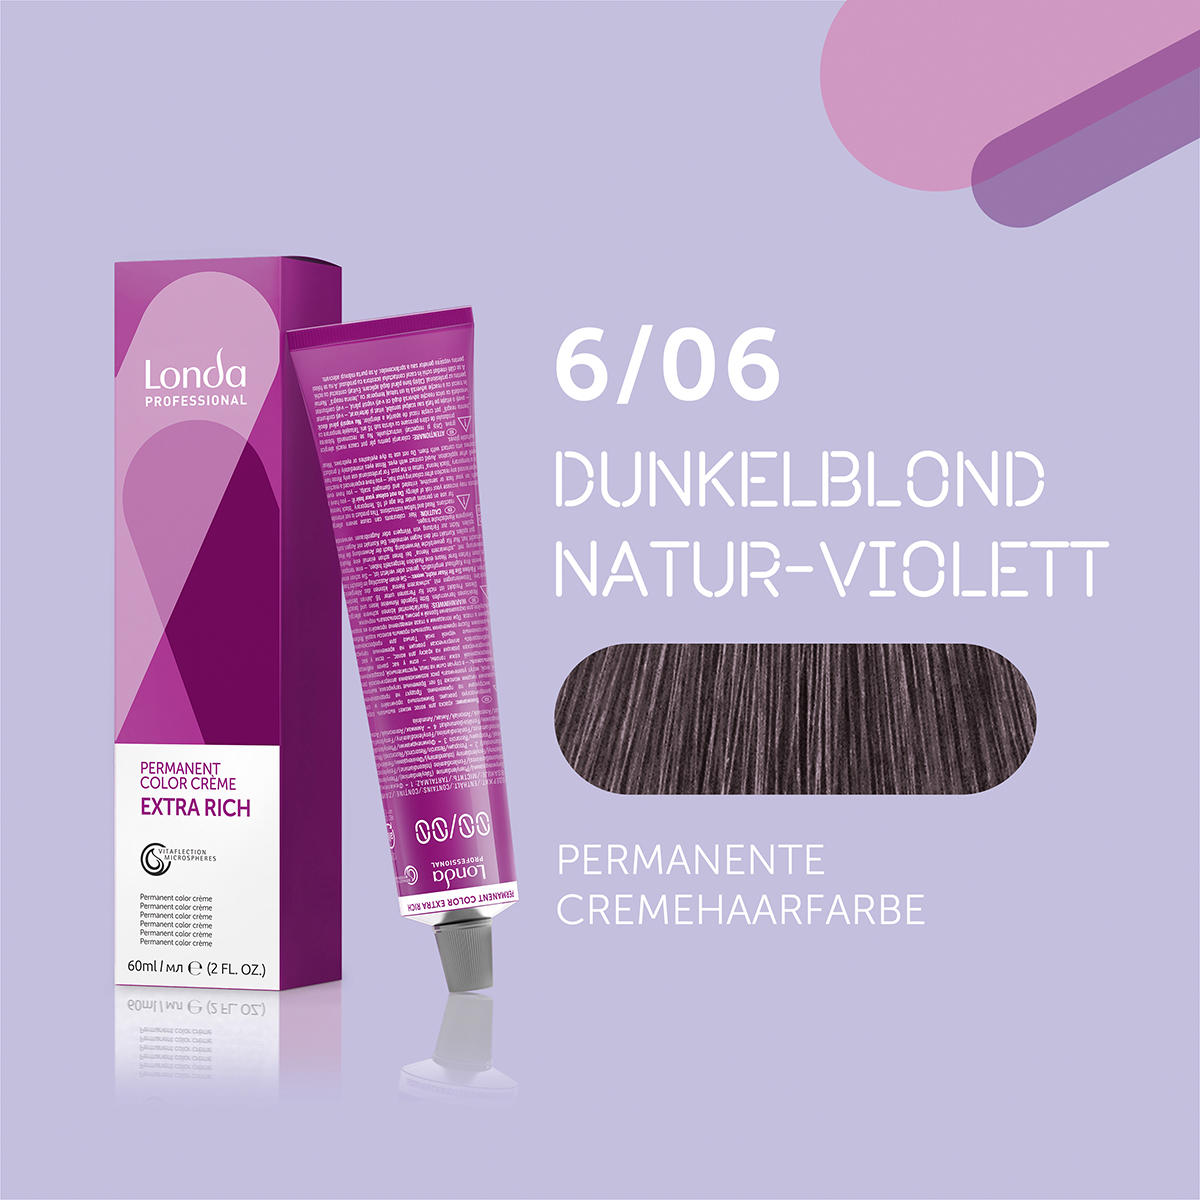 Londa Permanente Cremehaarfarbe Extra Rich 6/06 Dunkelblond Natur Violett, Tube 60 ml